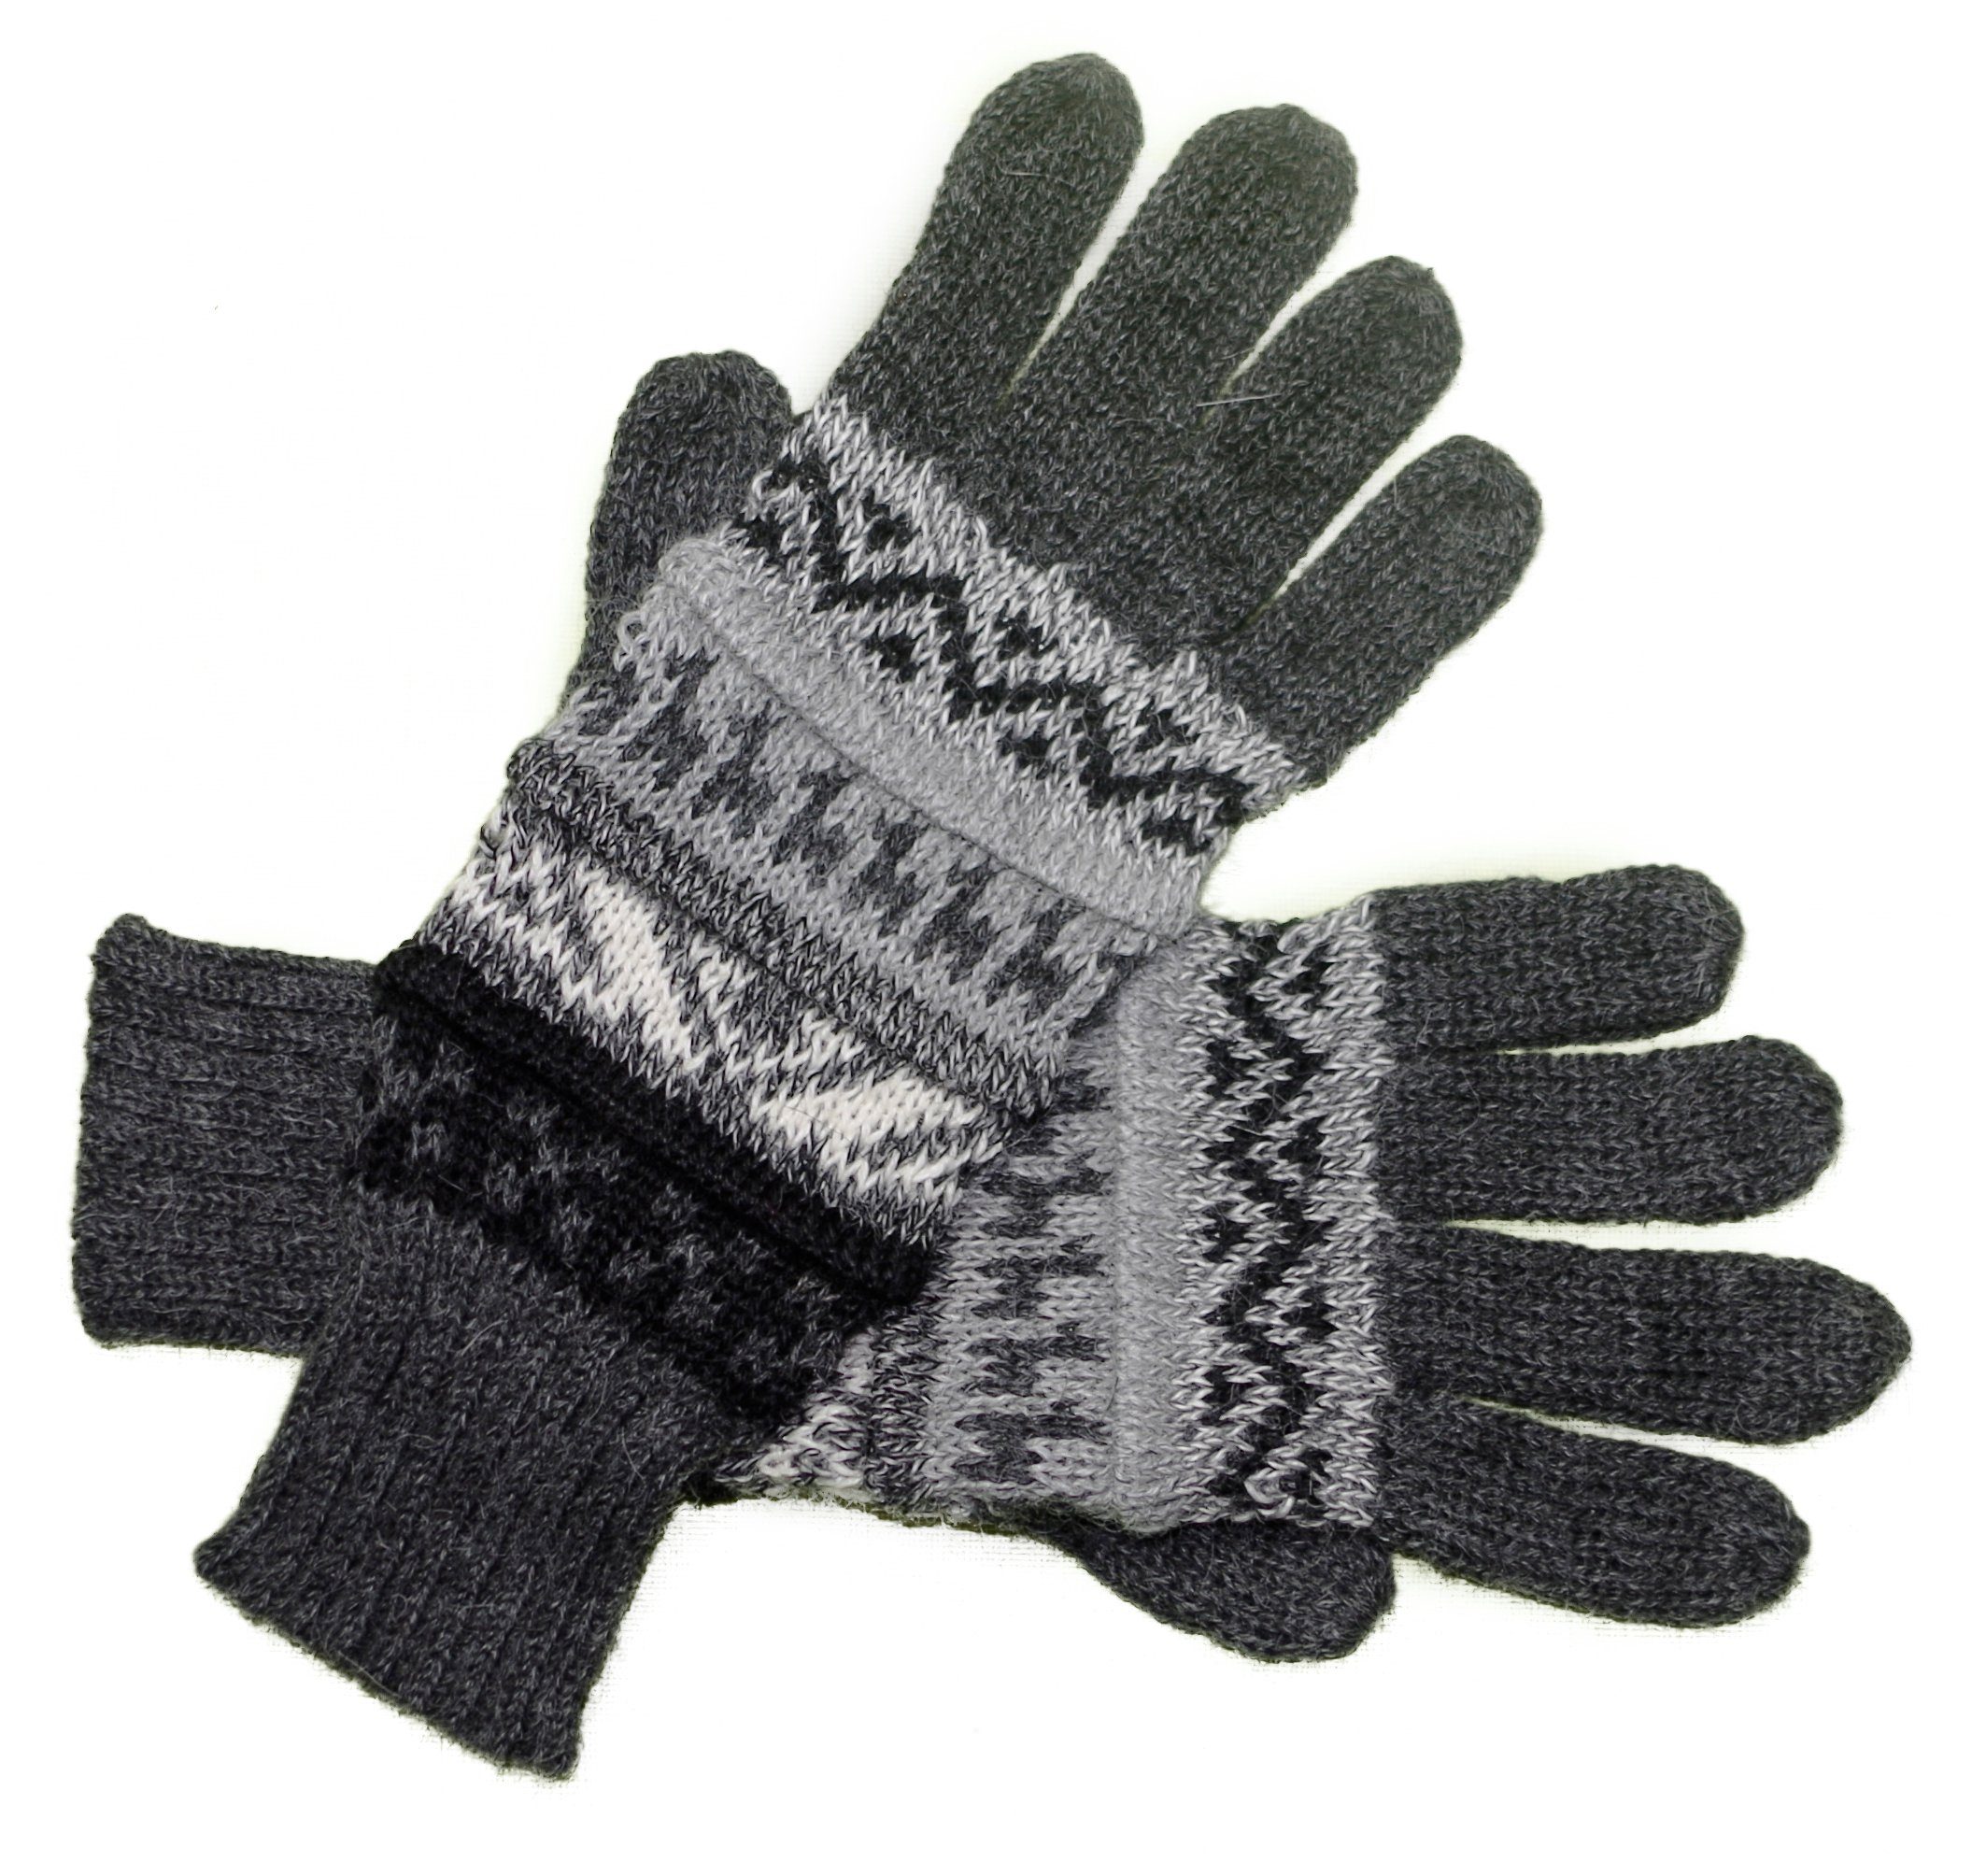 Fingerhandschuhe Guantilissi Gear aus Posh Strickhandschuhe Alpakawolle grau dunkel 100% Alpaka